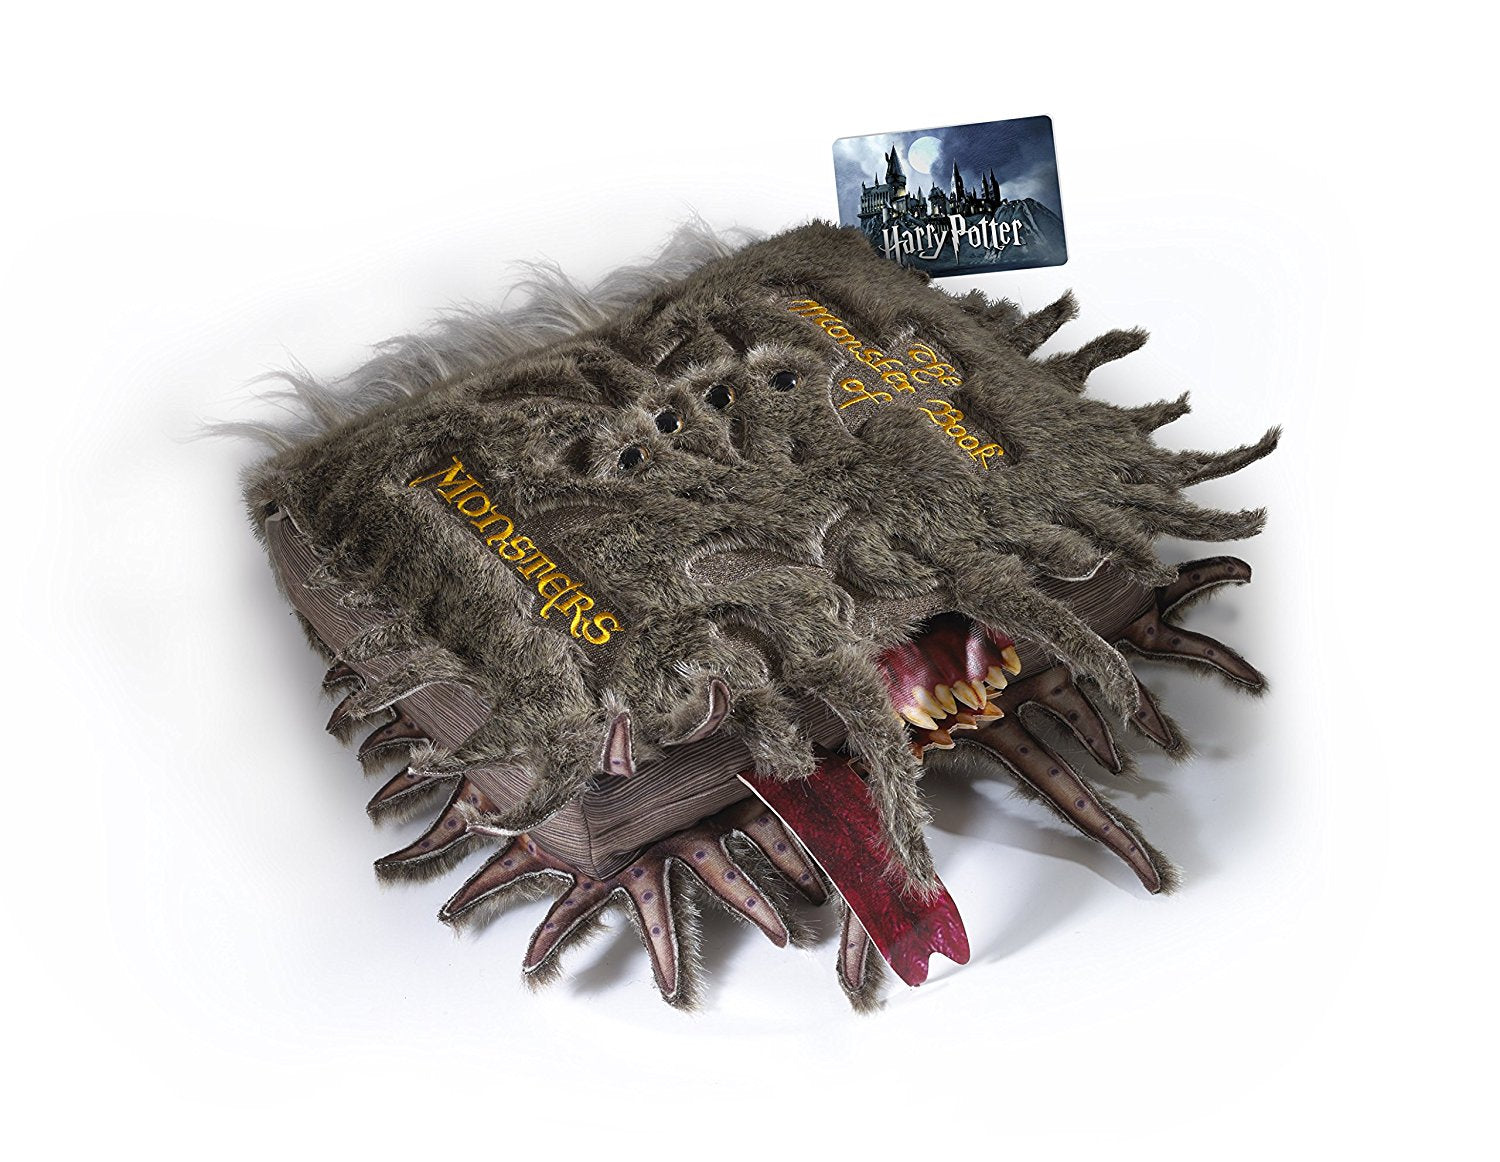 Harry Potter - The Monster Book of Monsters Plush 35cm